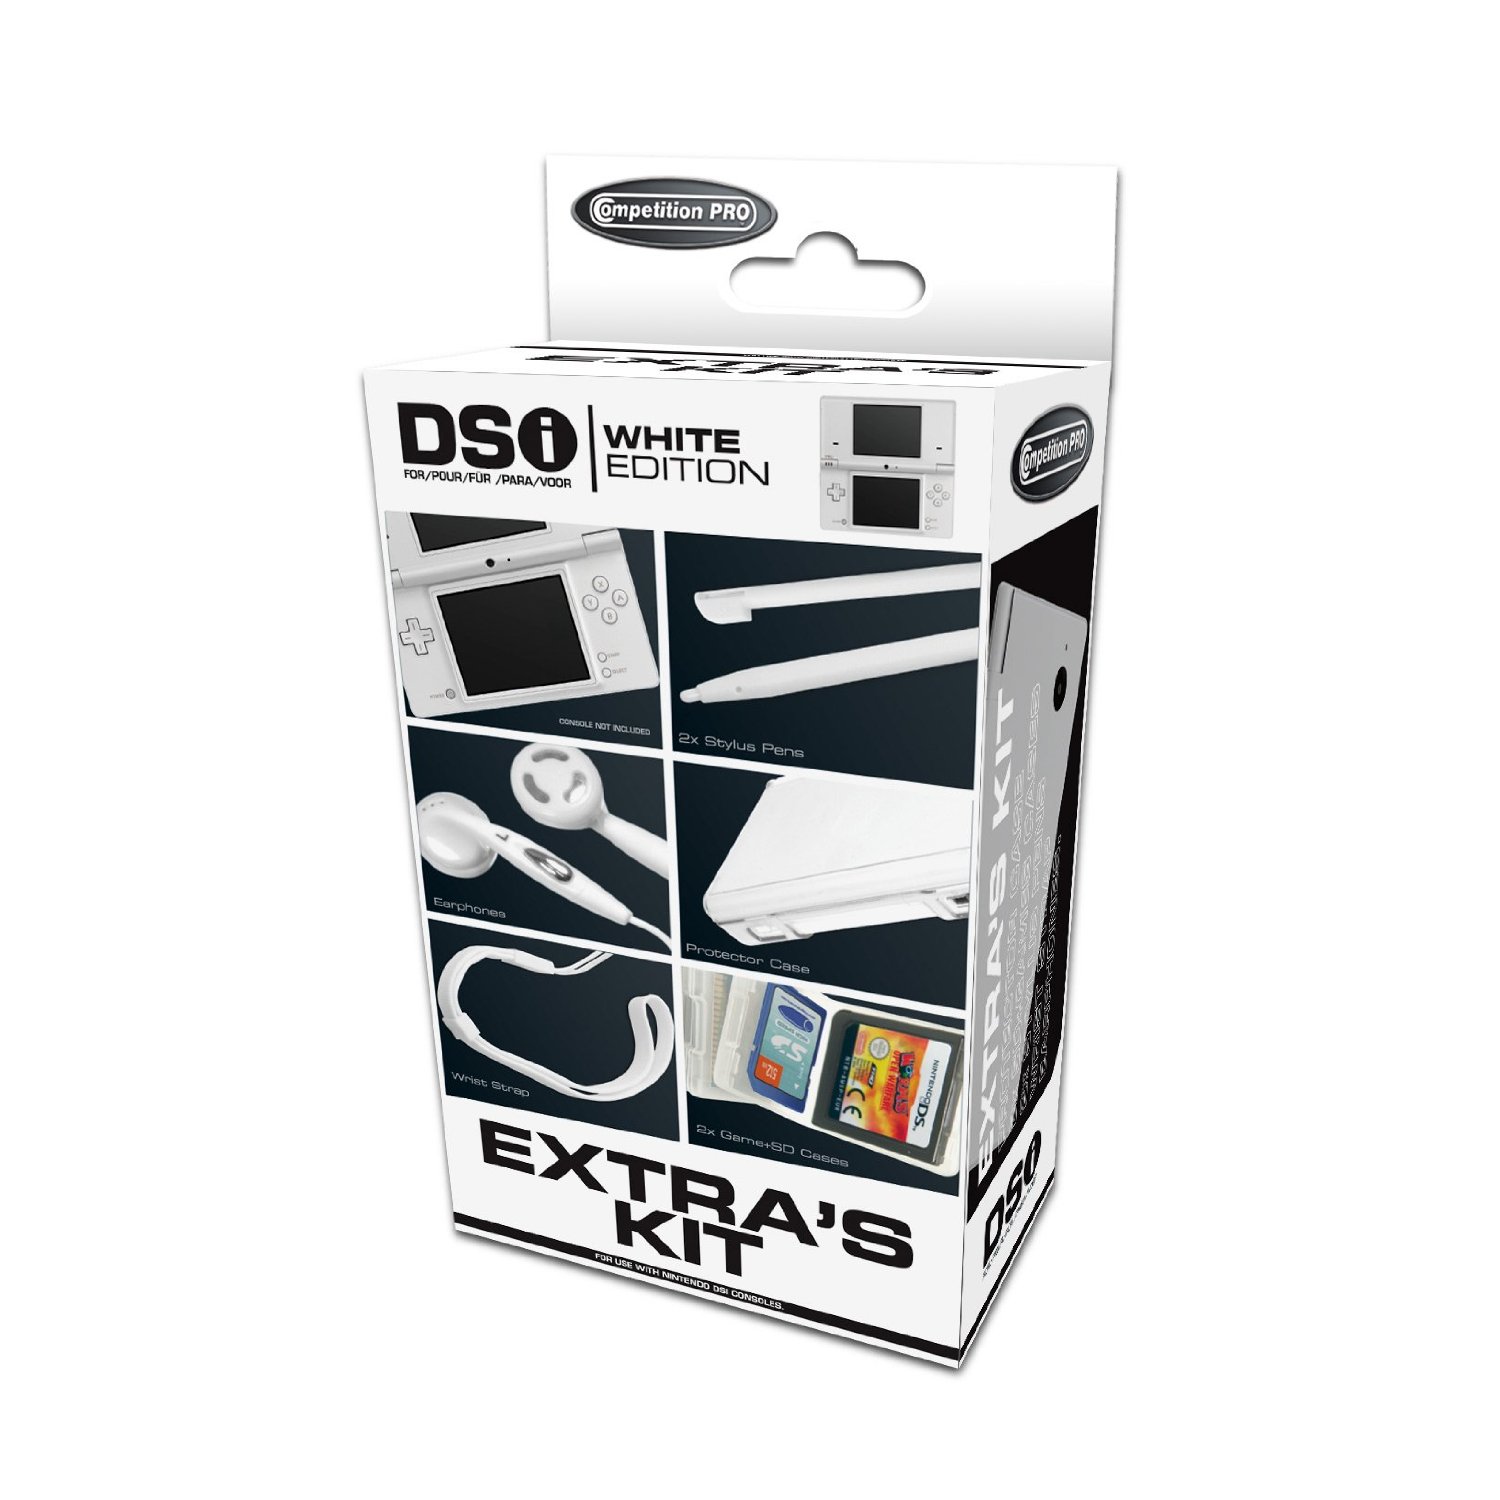 Competition Pro Extras Kit - White DSi